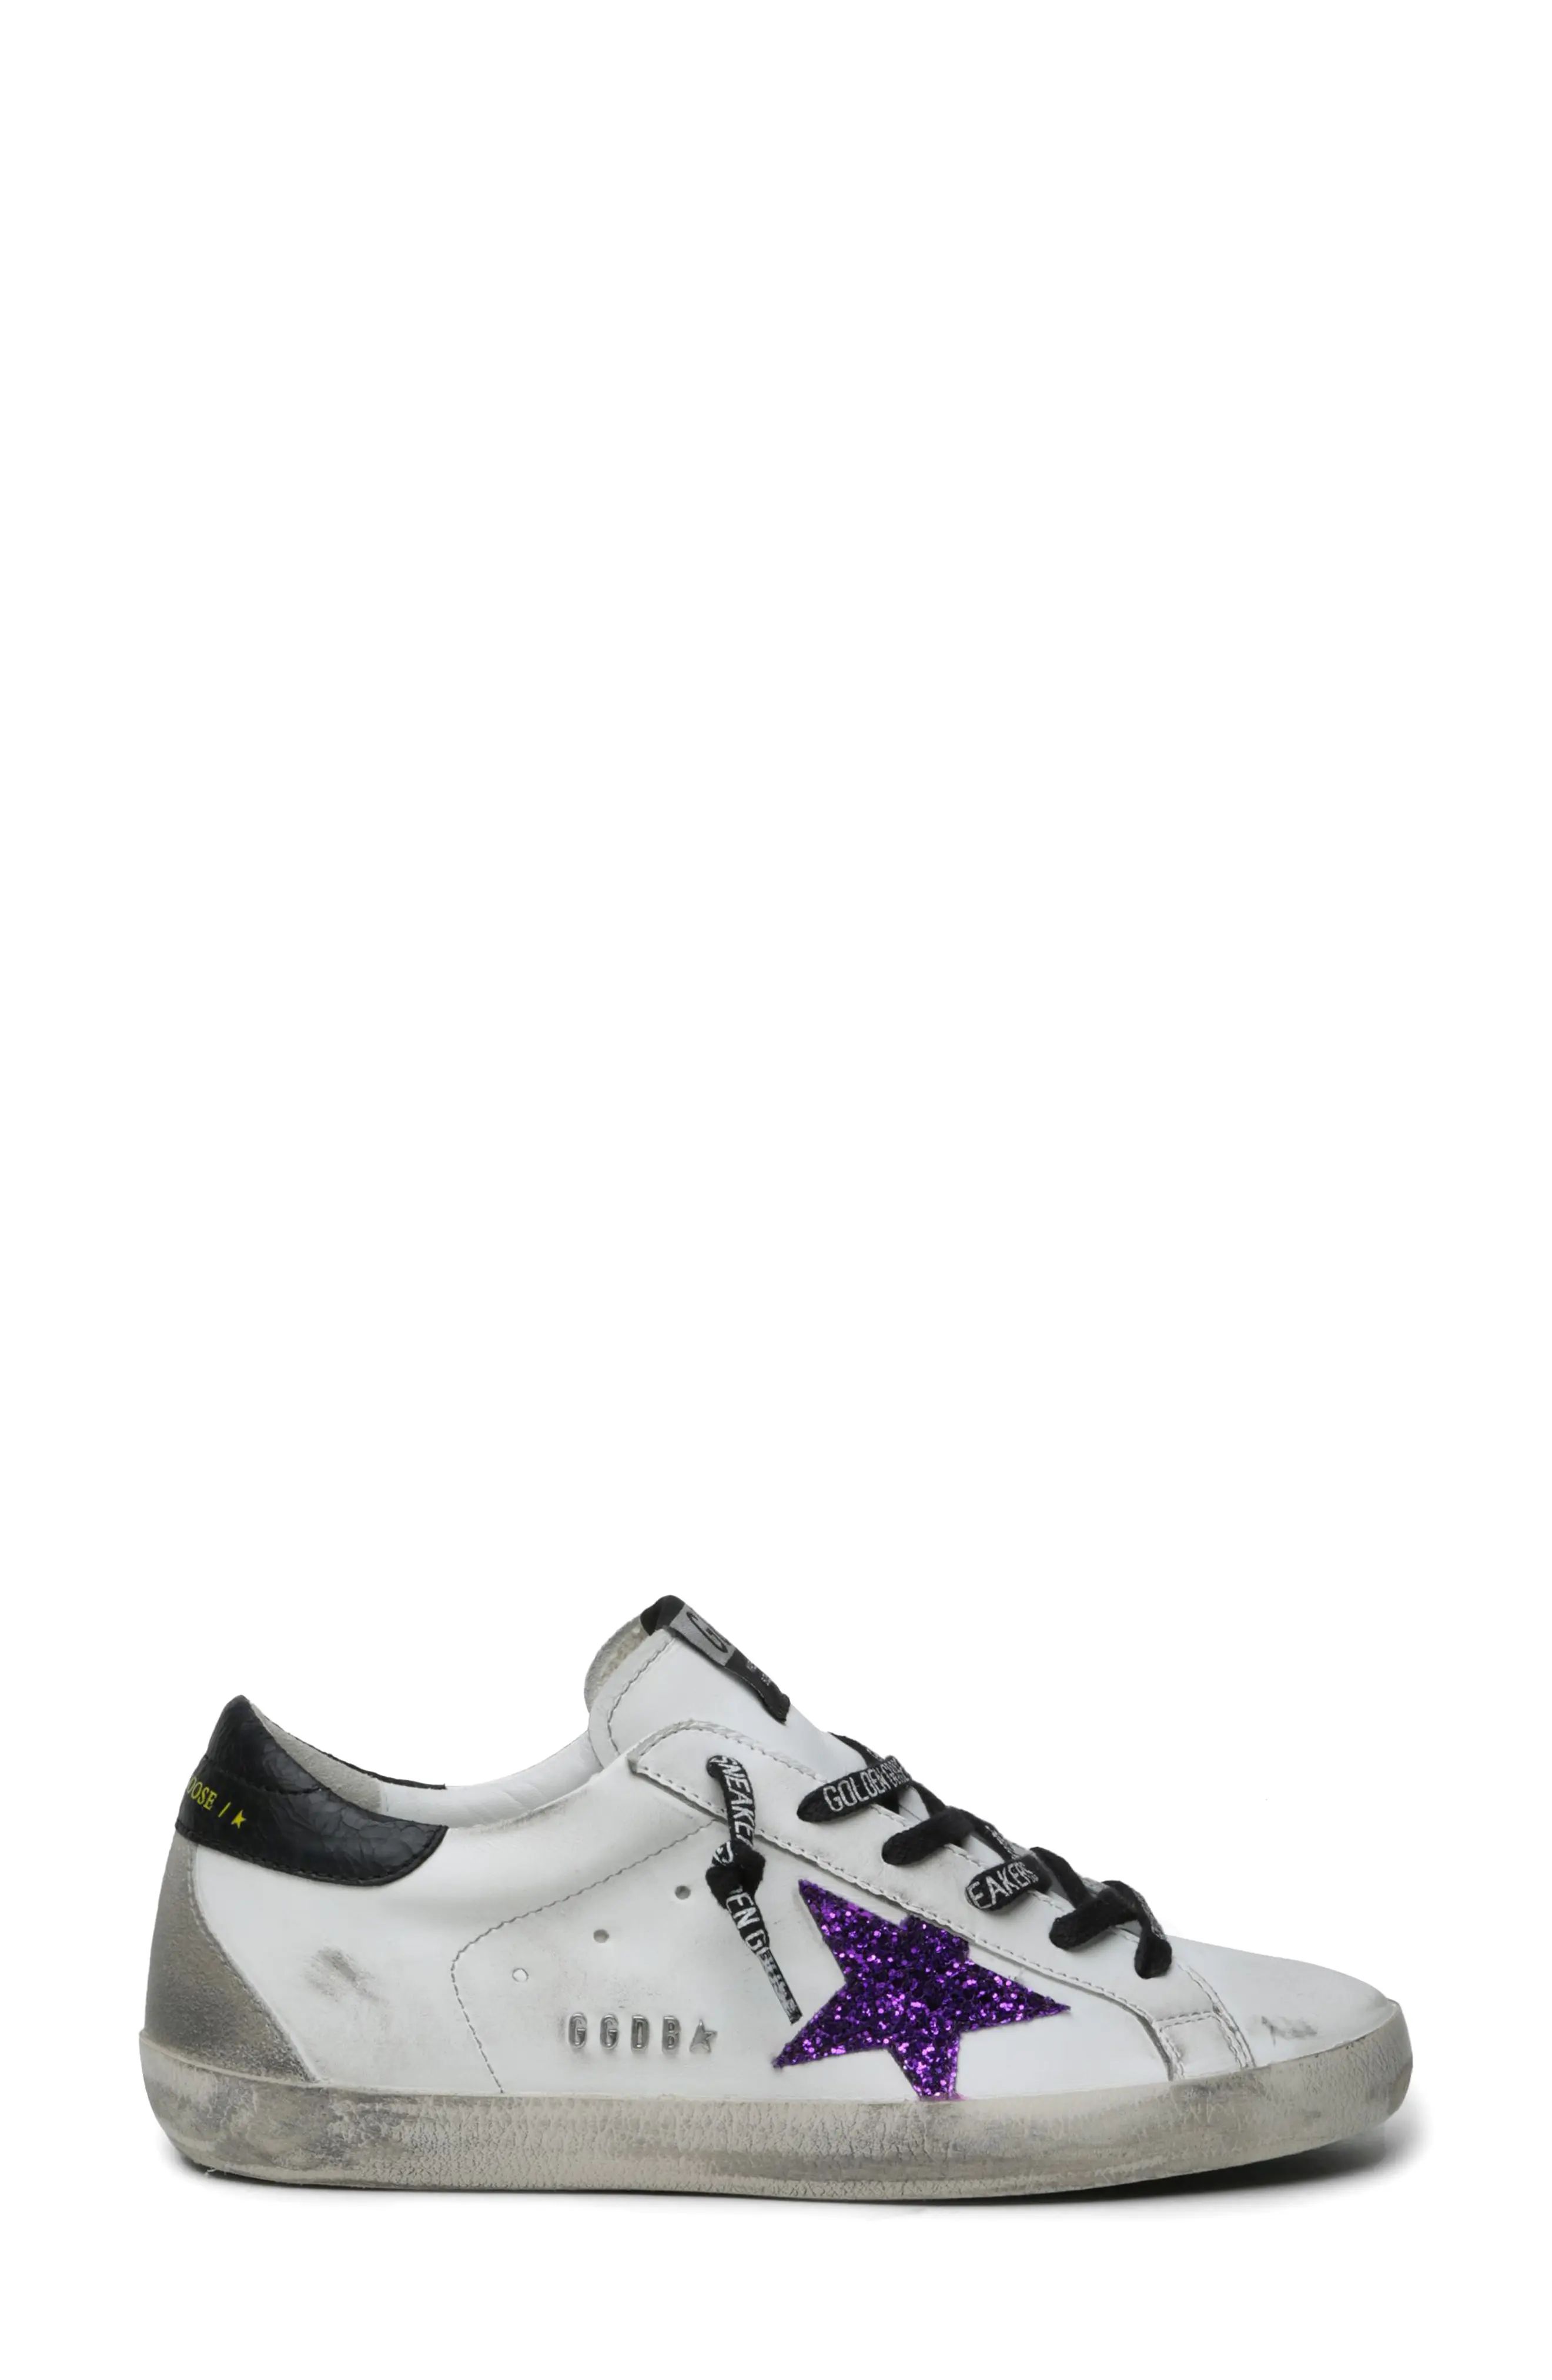 Golden Goose Super-Star Low Top Sneaker, Size 5Us in White/Purple/Black/Ice at Nordstrom | Nordstrom